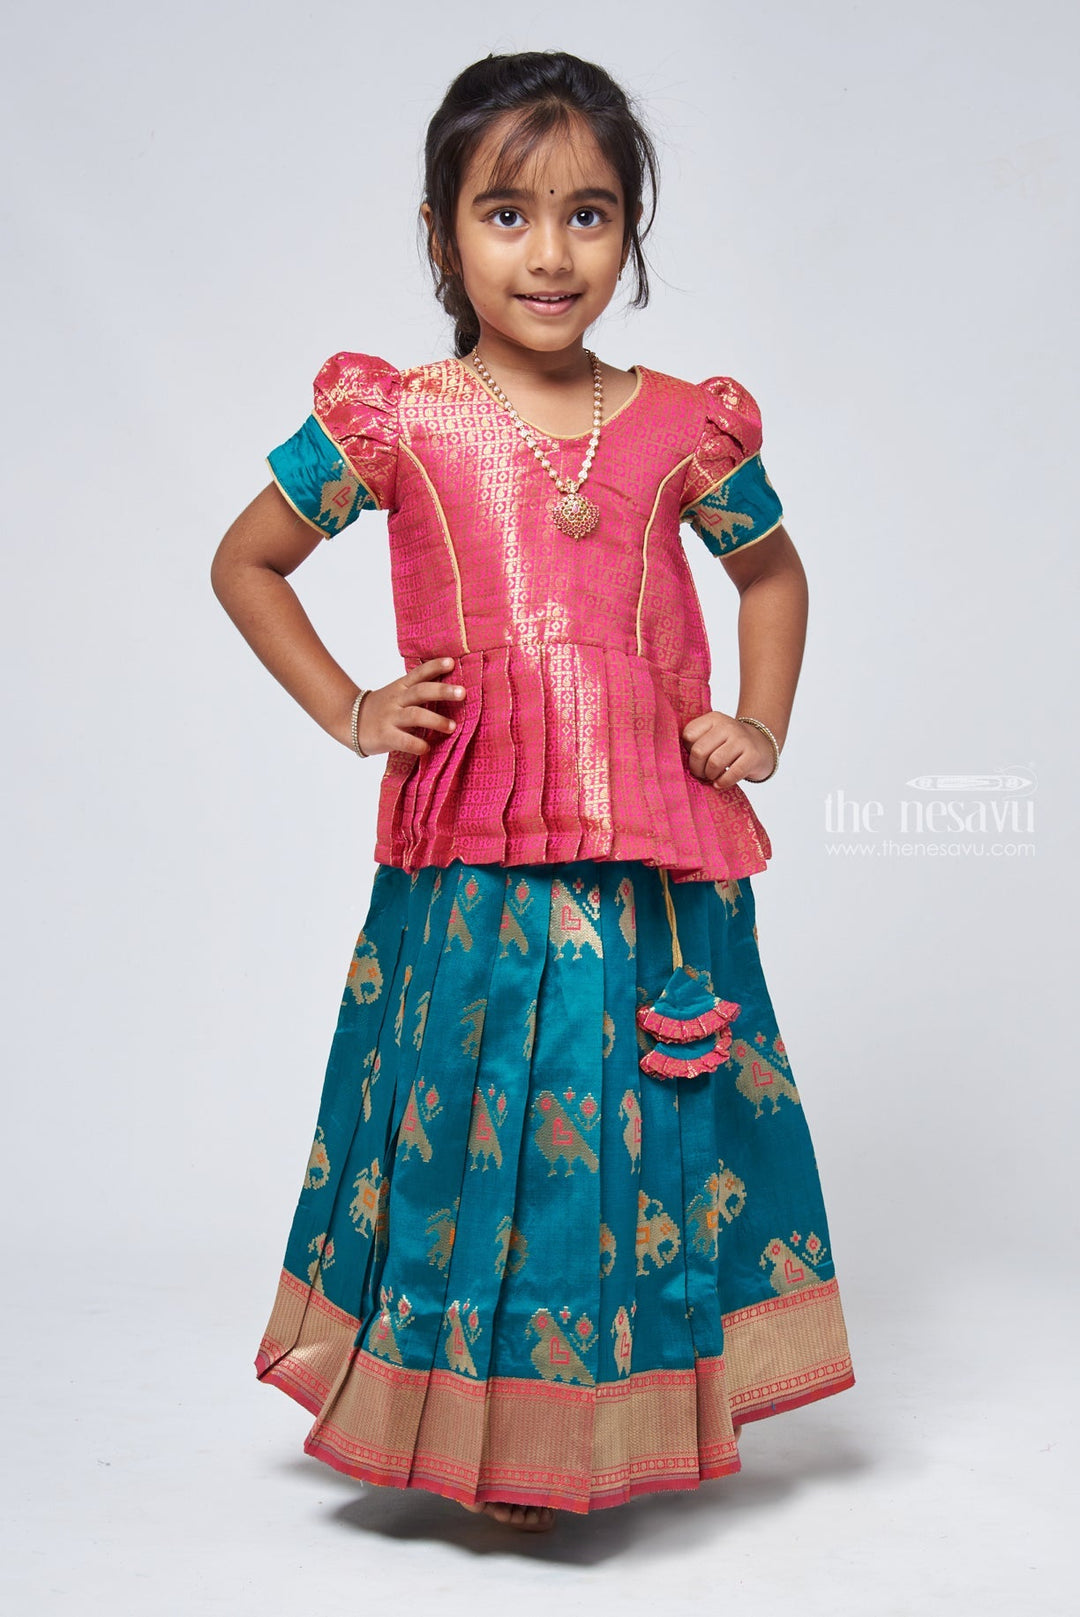 The Nesavu Pattu Pavadai Classic Pattu Langa Silk Peplum Green Blouse with Traditional Pavadai Sattai - Festive Delight Nesavu 14 (6M) / Green / Silk Blend GPP308B-14 Girls Pattu Skirt And Blouse Set | Indian Ethnic Dress For Kids | The Nesavu